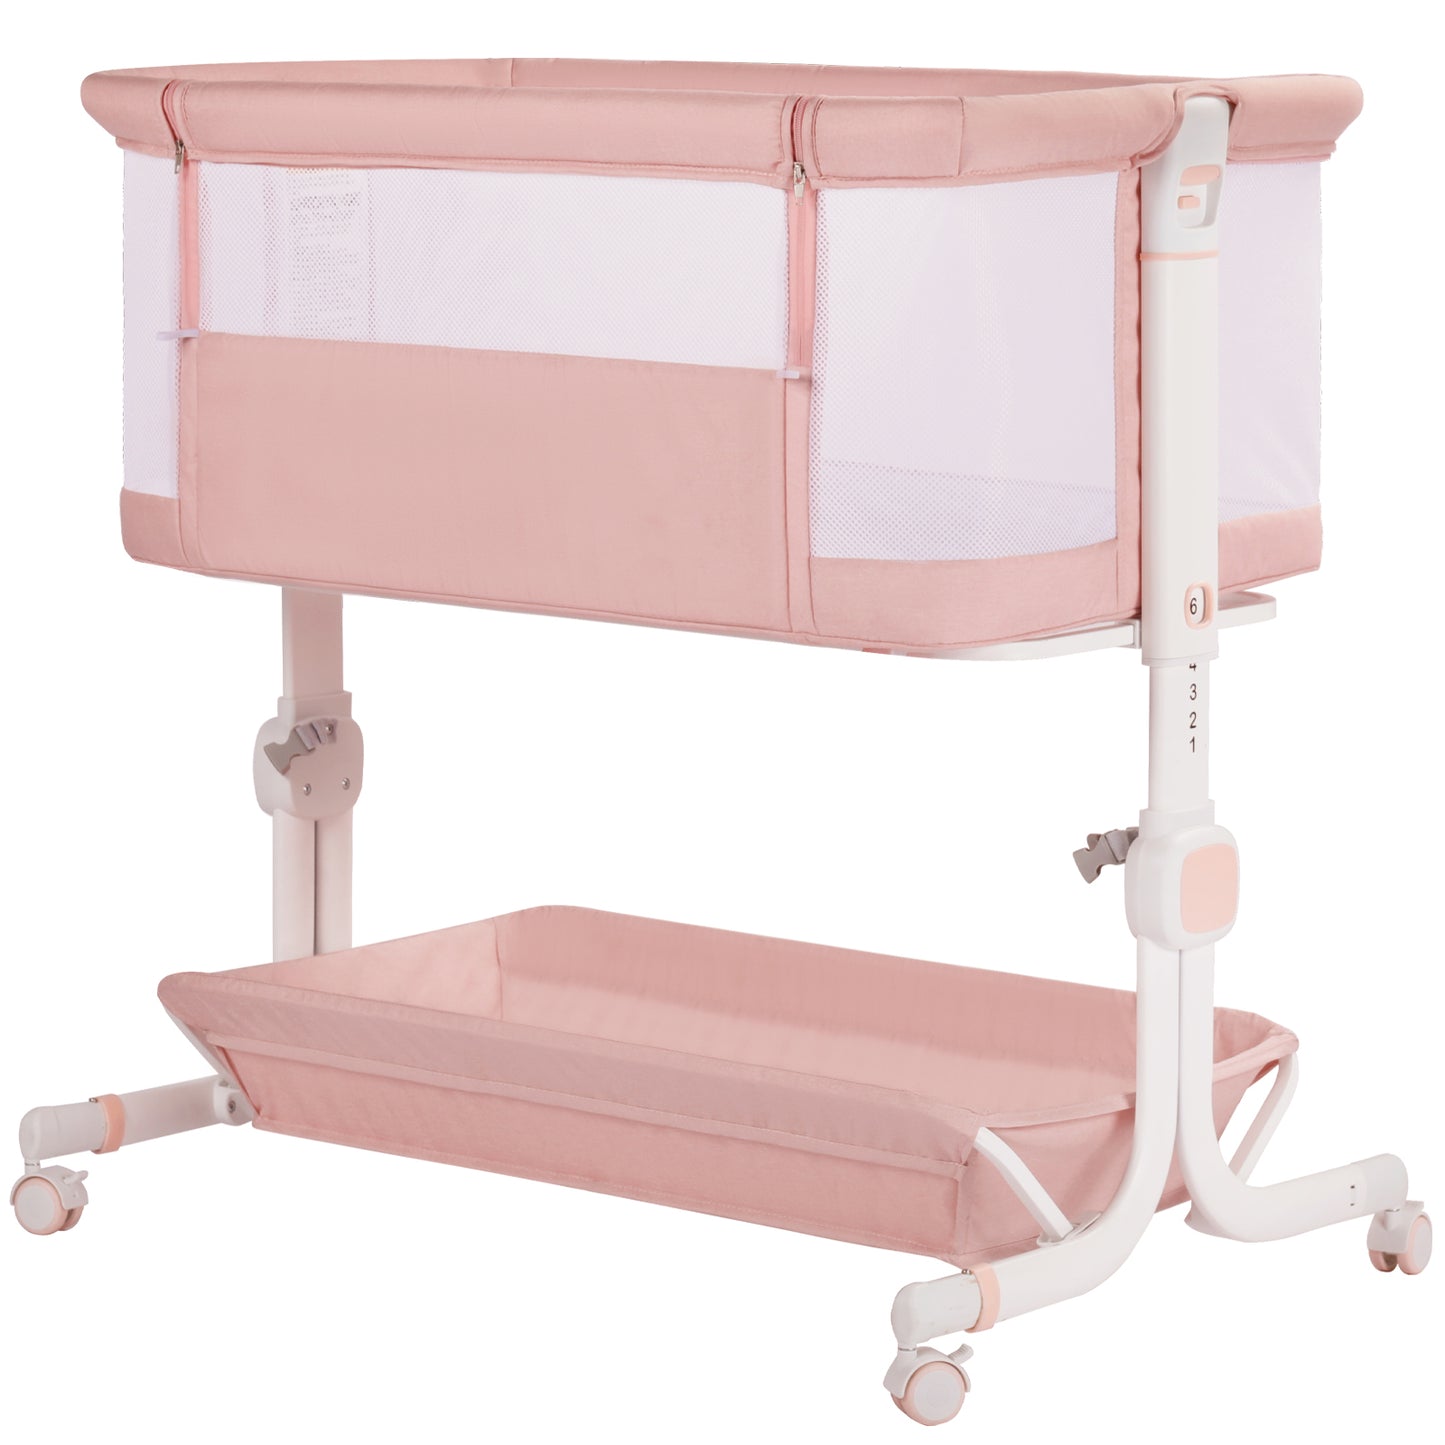 Baby Bassinet Bedside Sleeper with Wheels, Newborn Baby Cribs w/Storage Basket, Pink